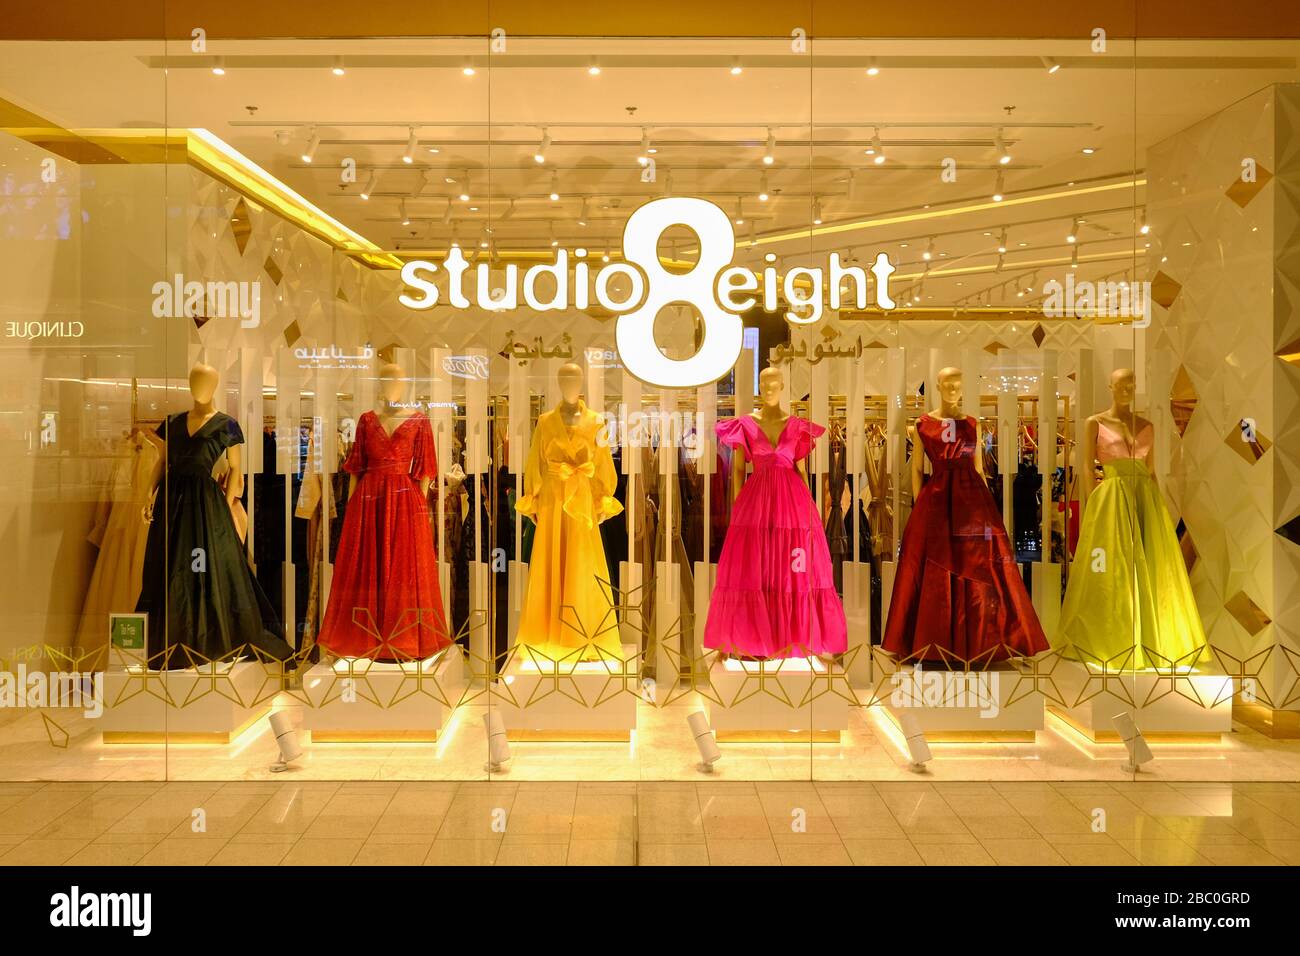 Studio Eight shop window inside the gigantic Dubai Mall in Downtown Dubai, United Arab Emirates. Stock Photo